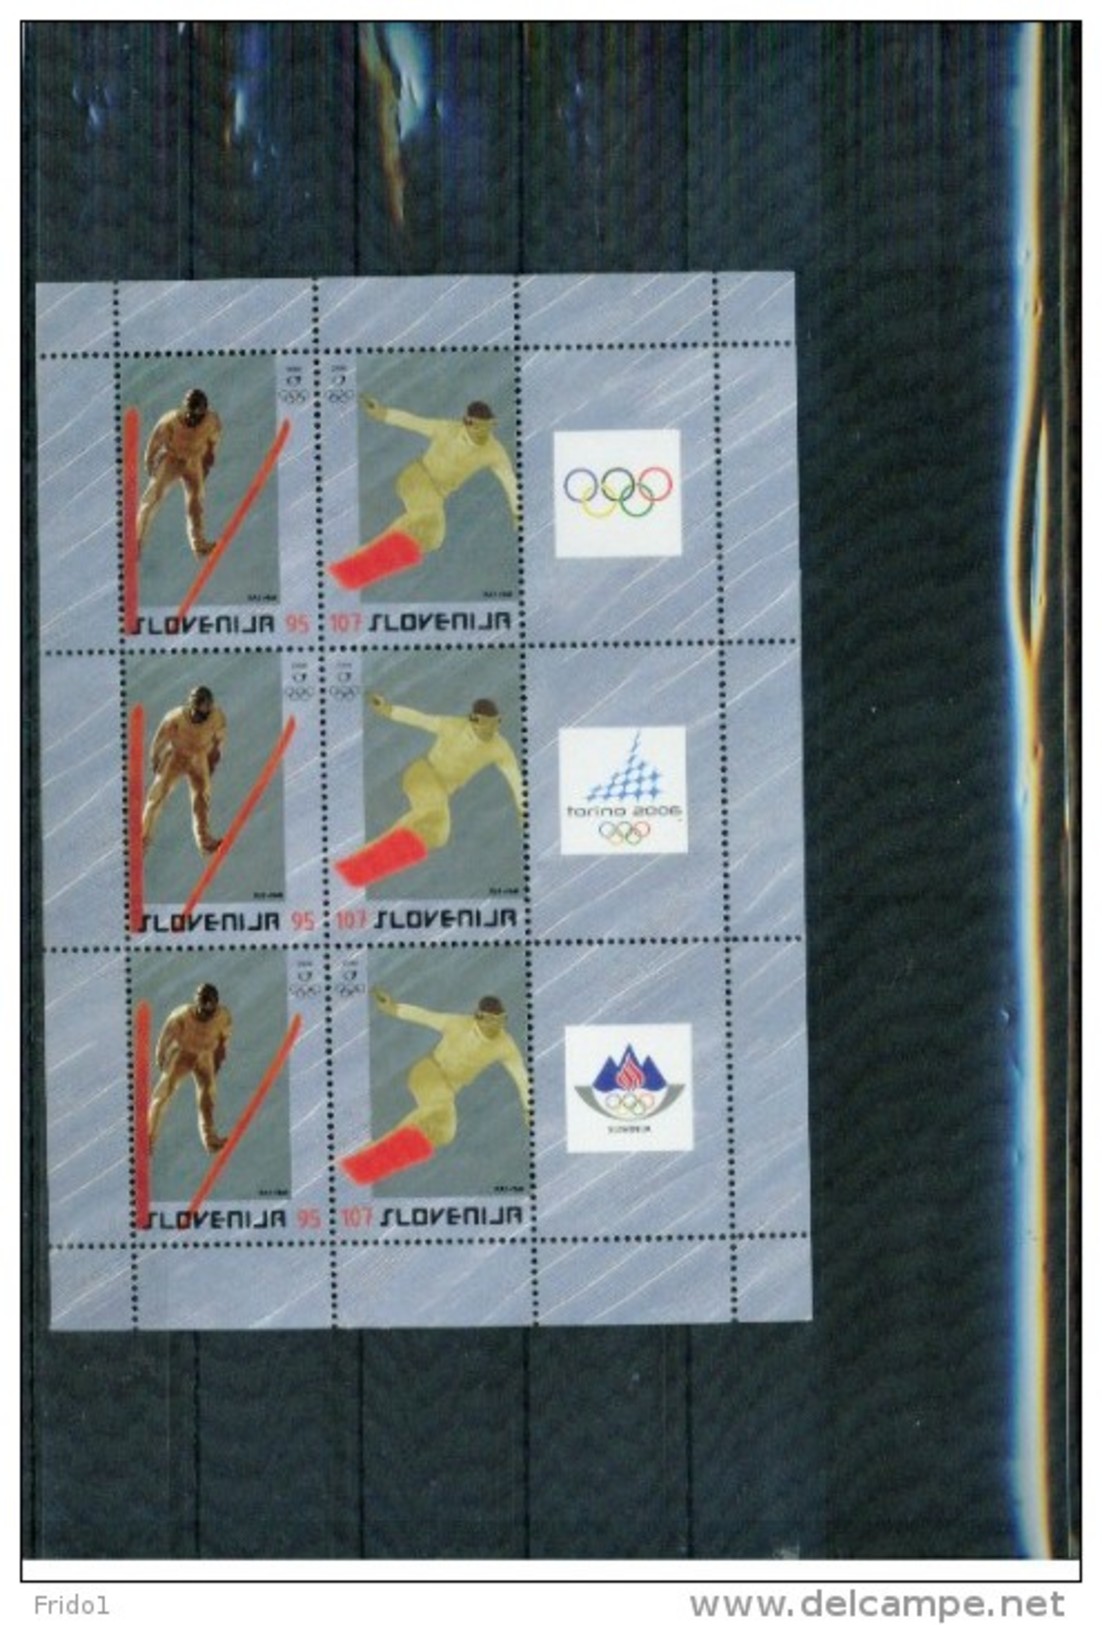 Slowenien / Slovenia 2006 Olympic Games Torino Kleinbogen / Sheet Postfrisch / MNH - Hiver 2006: Torino